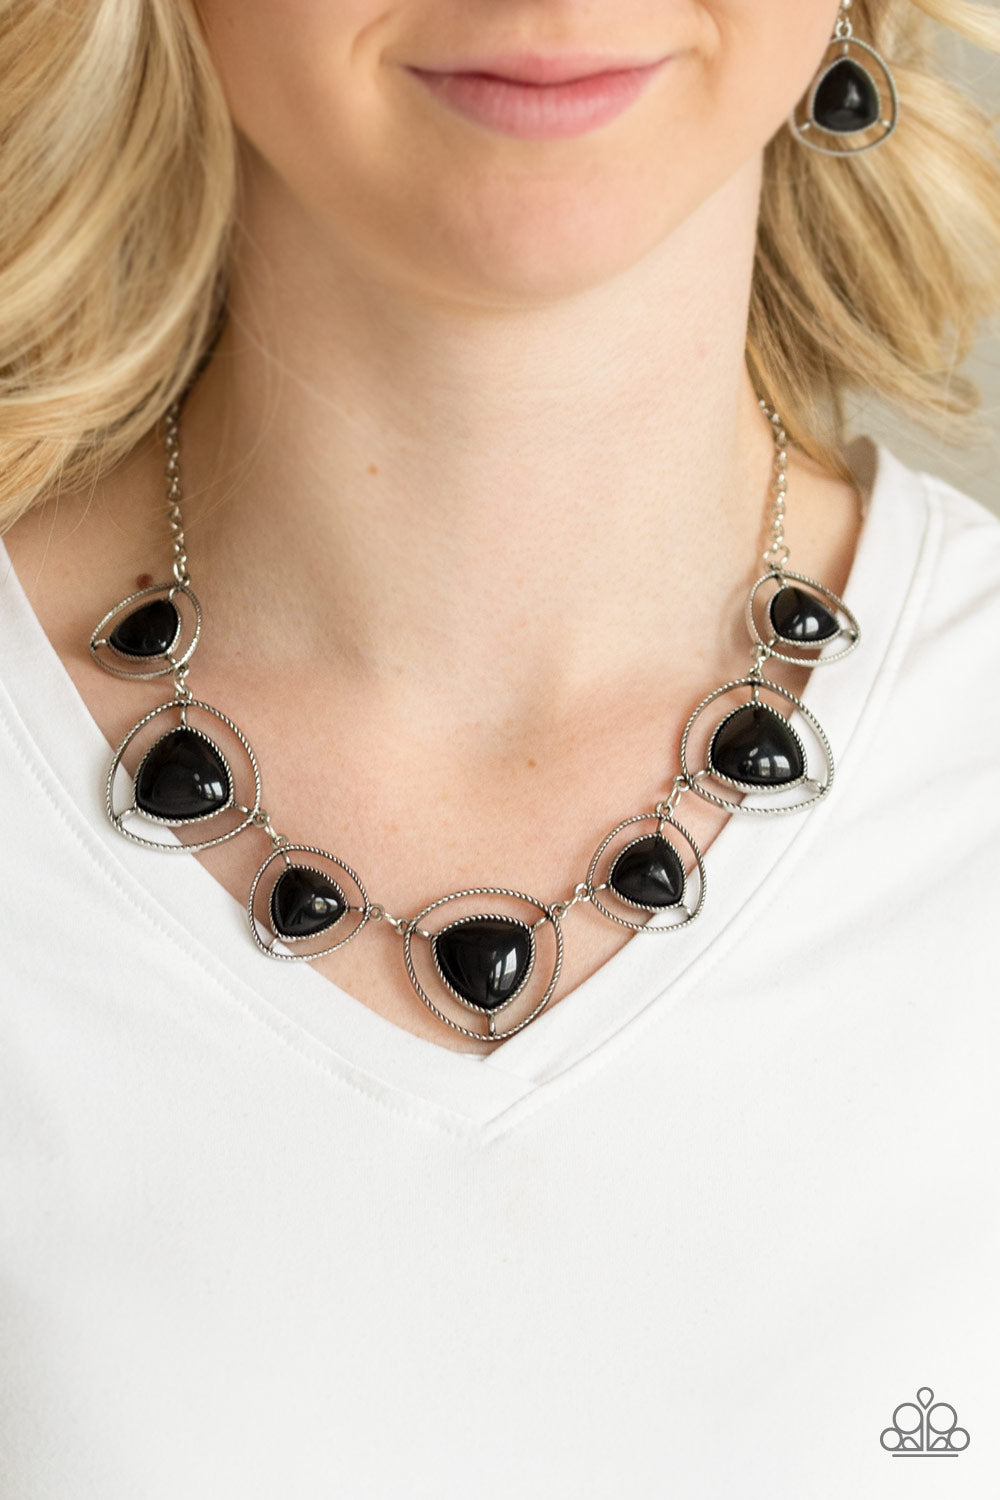 Paparazzi Accessories - Make A Point - Black Necklace - Aliesblingbar